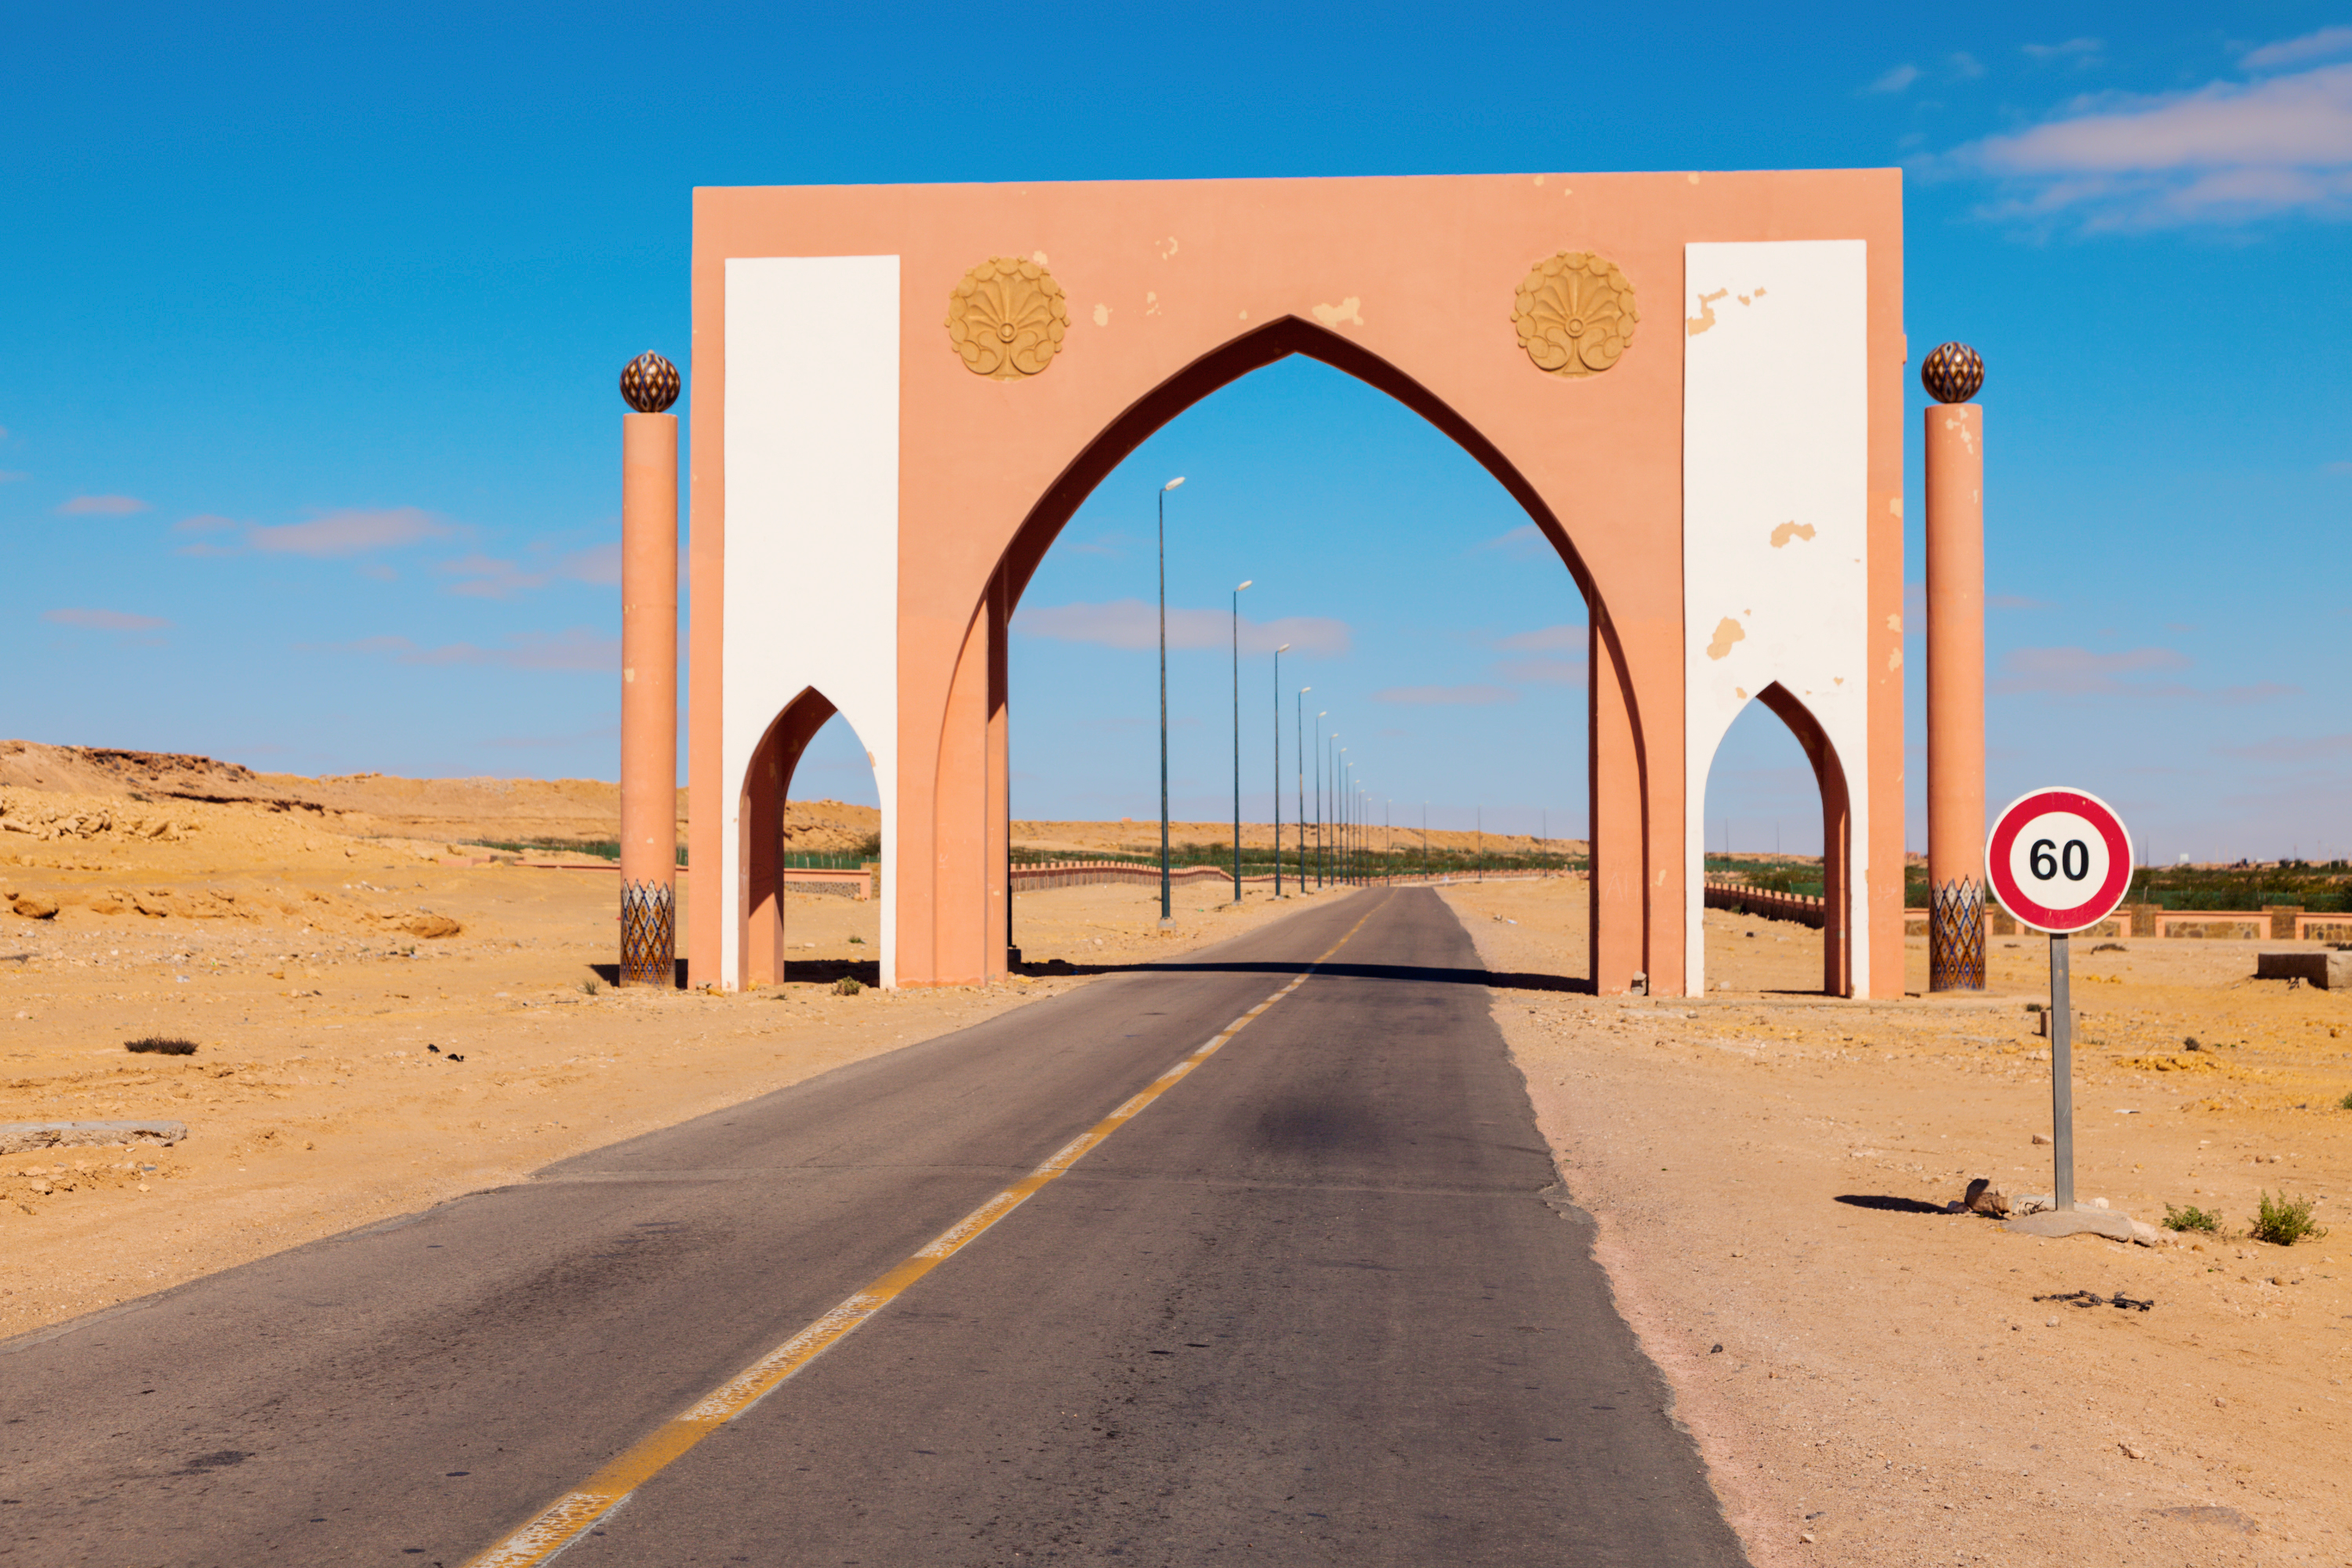  Day 1: LAAYOUNE – WESTERN SAHARA